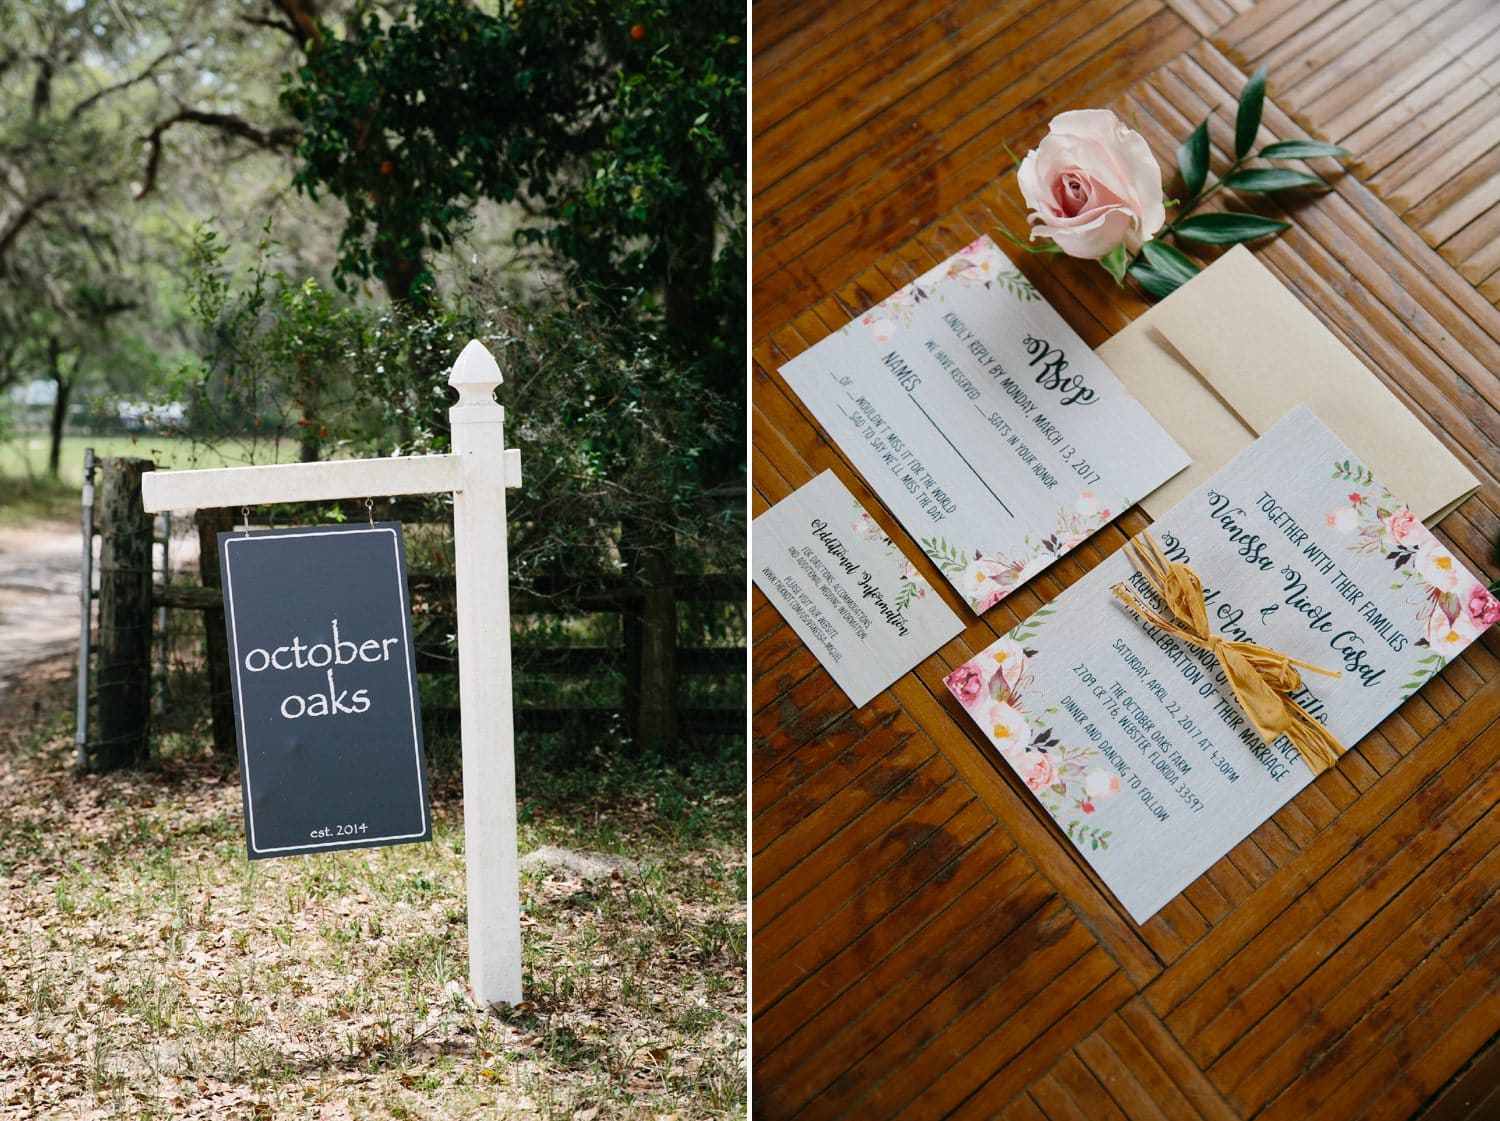 Rustic Chic wedding at October Oaks Farm. Paper invitations photos by Carolina Guzik